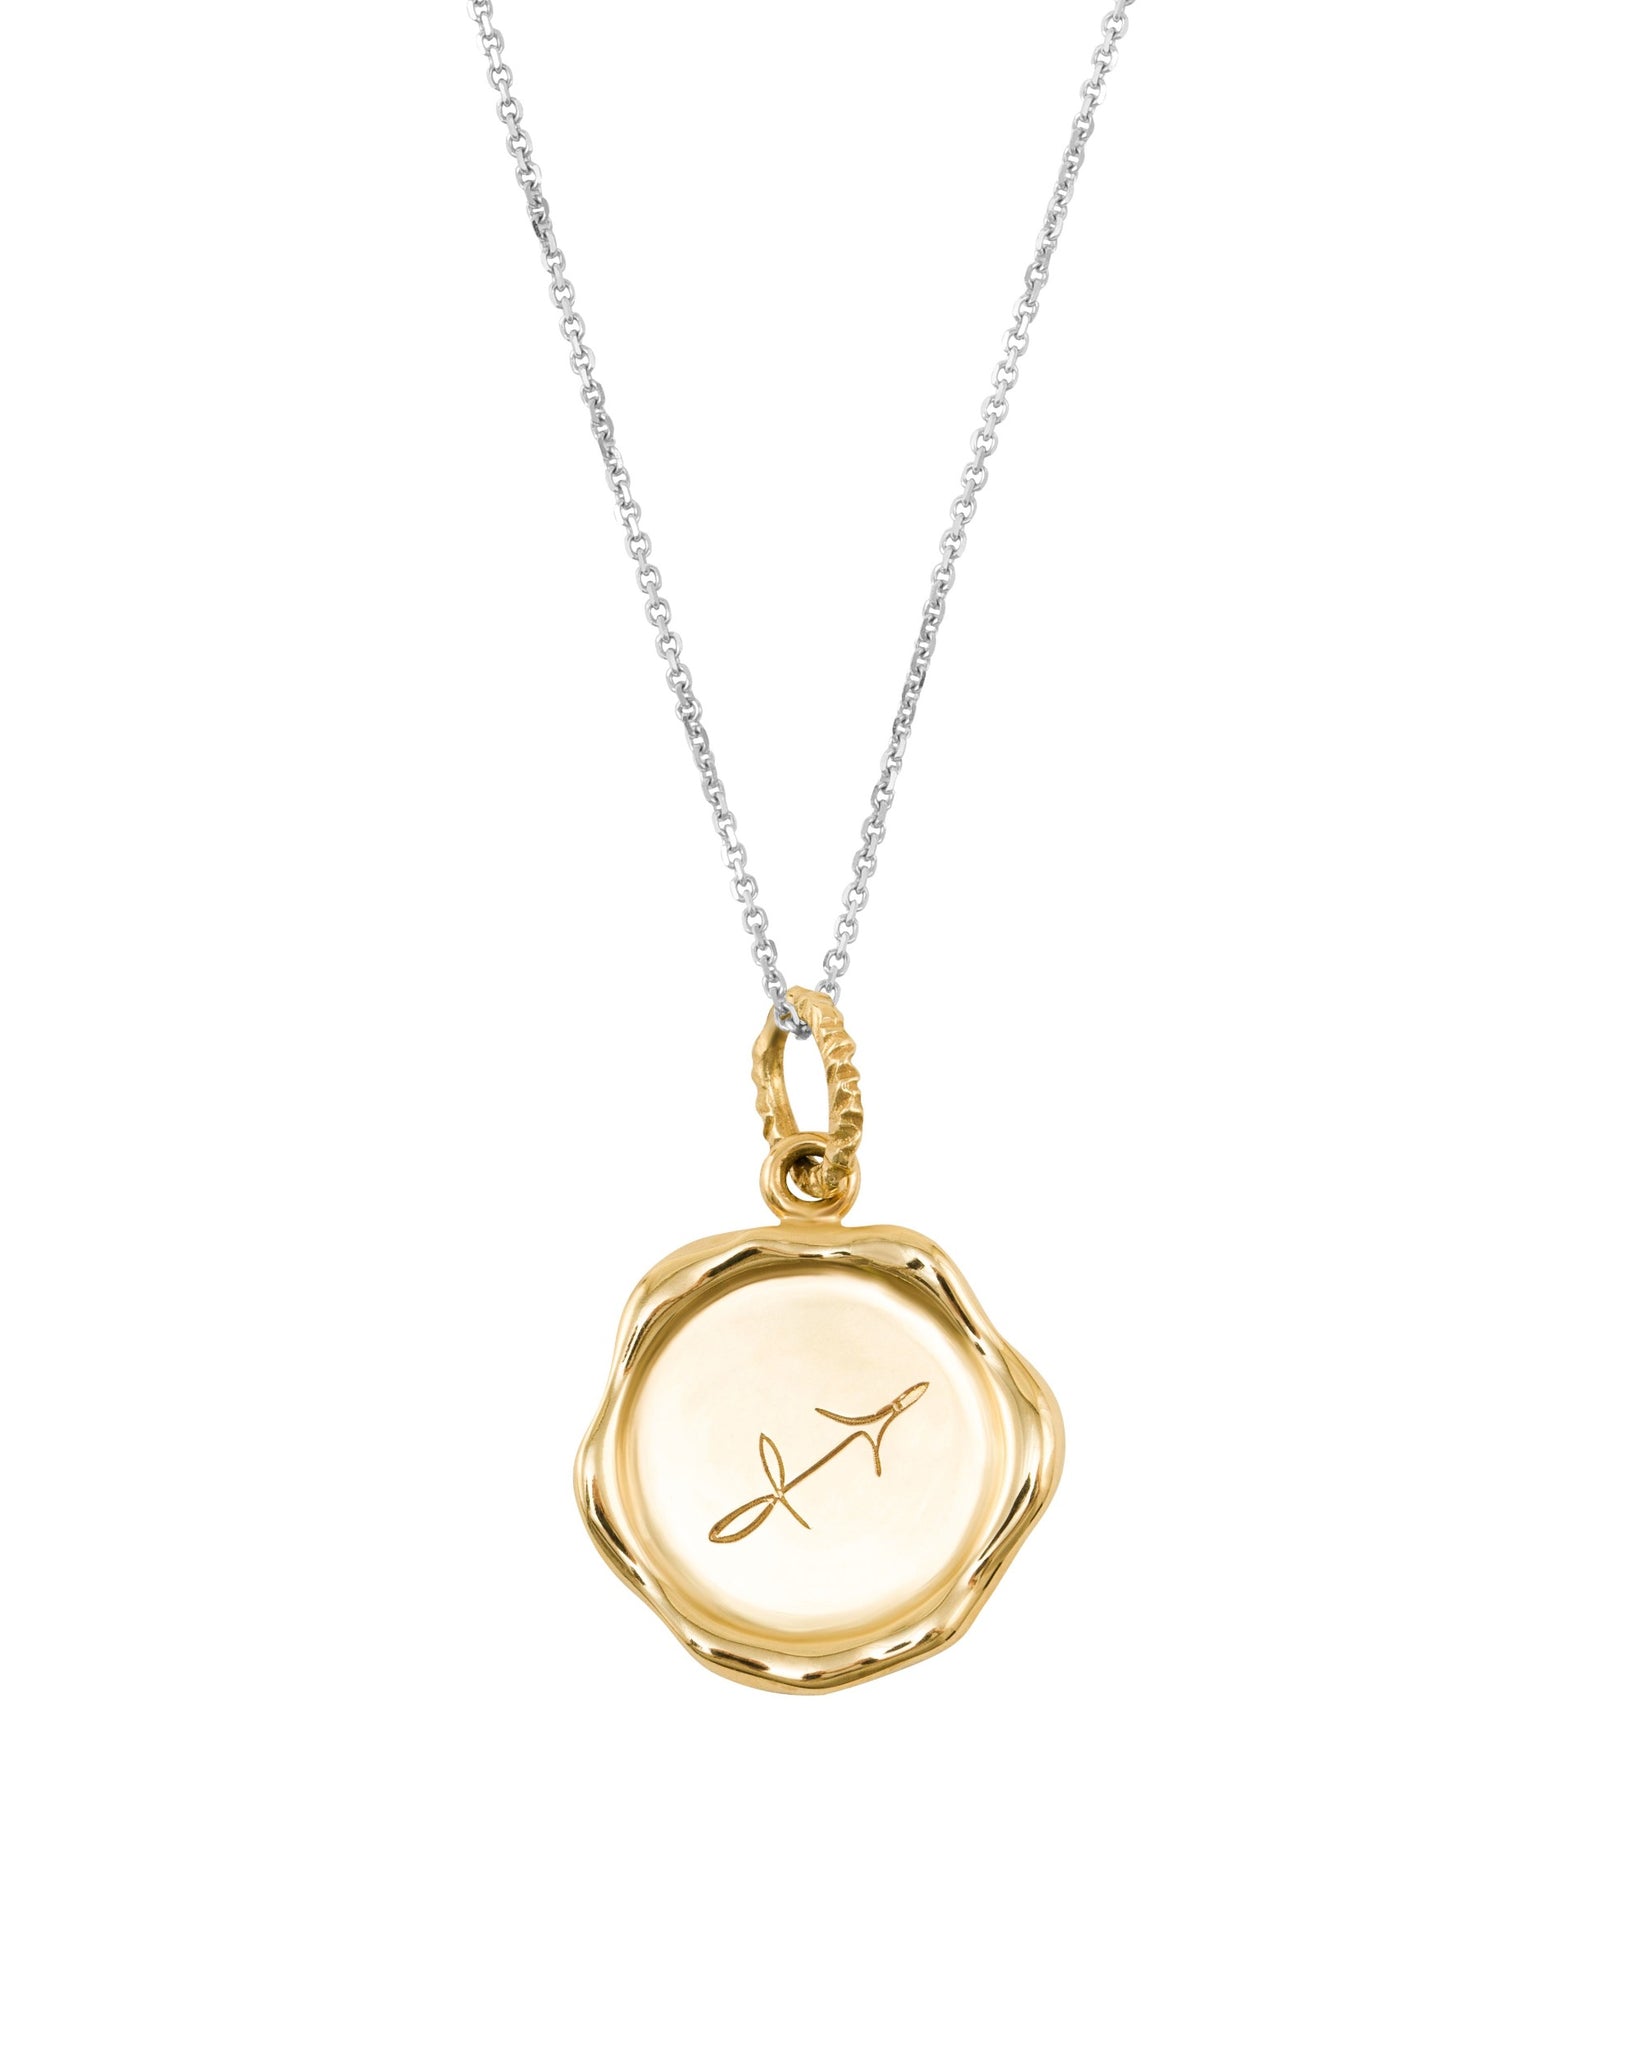 Zodiac Sagittarius necklace